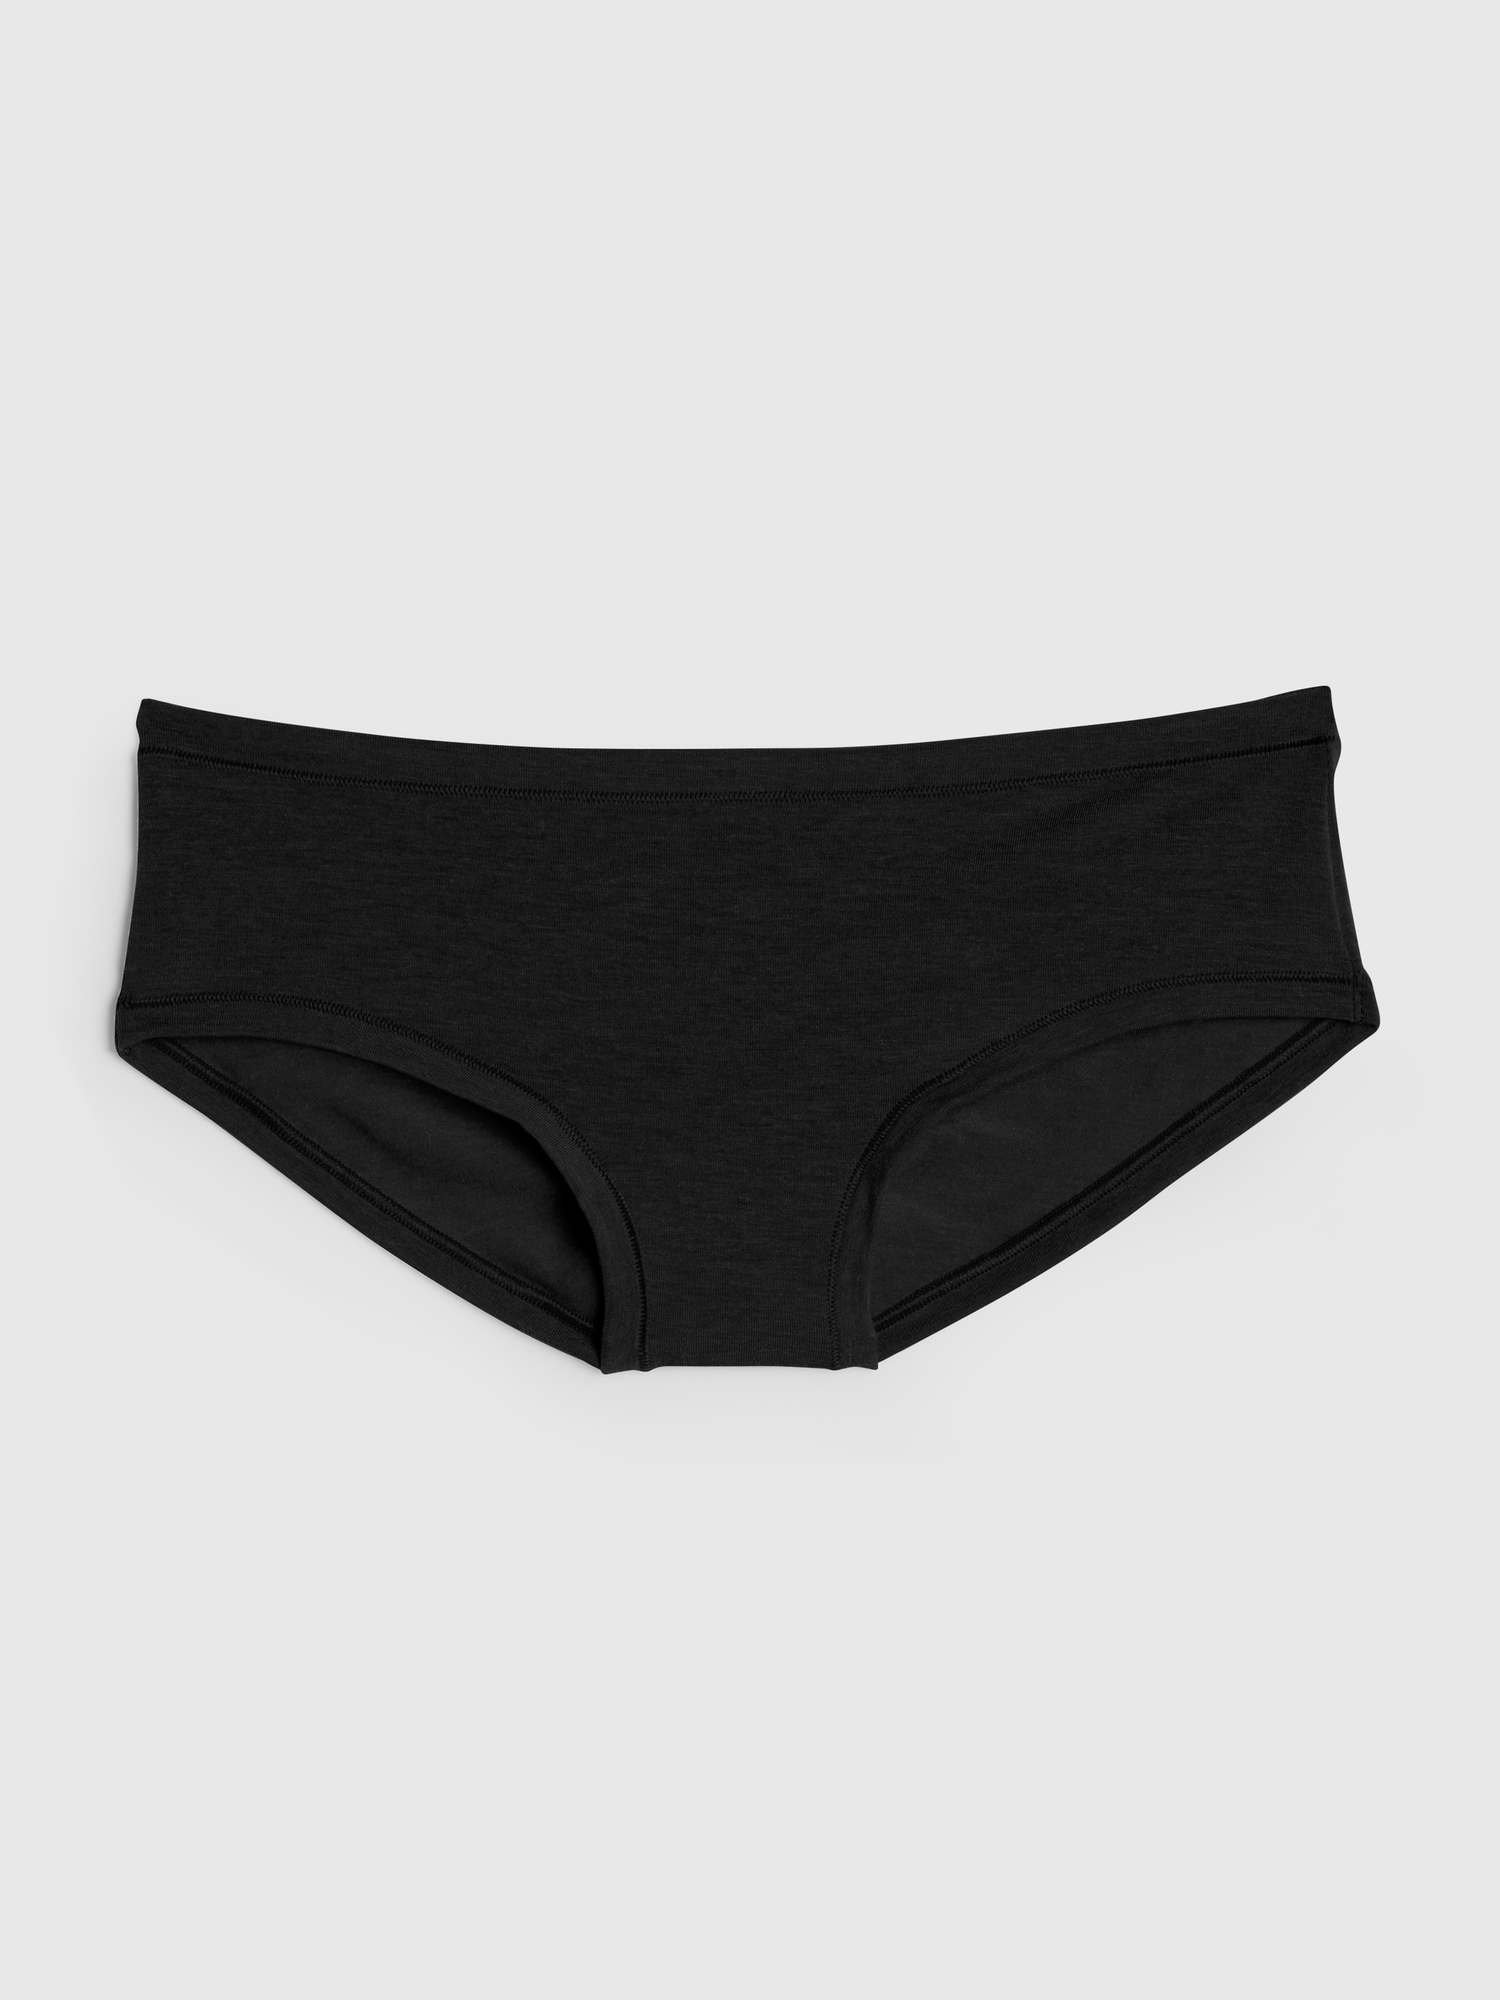 NWT Gap Body Ladies Xl Black velour sexy Underwear Panties RTL 14.95 